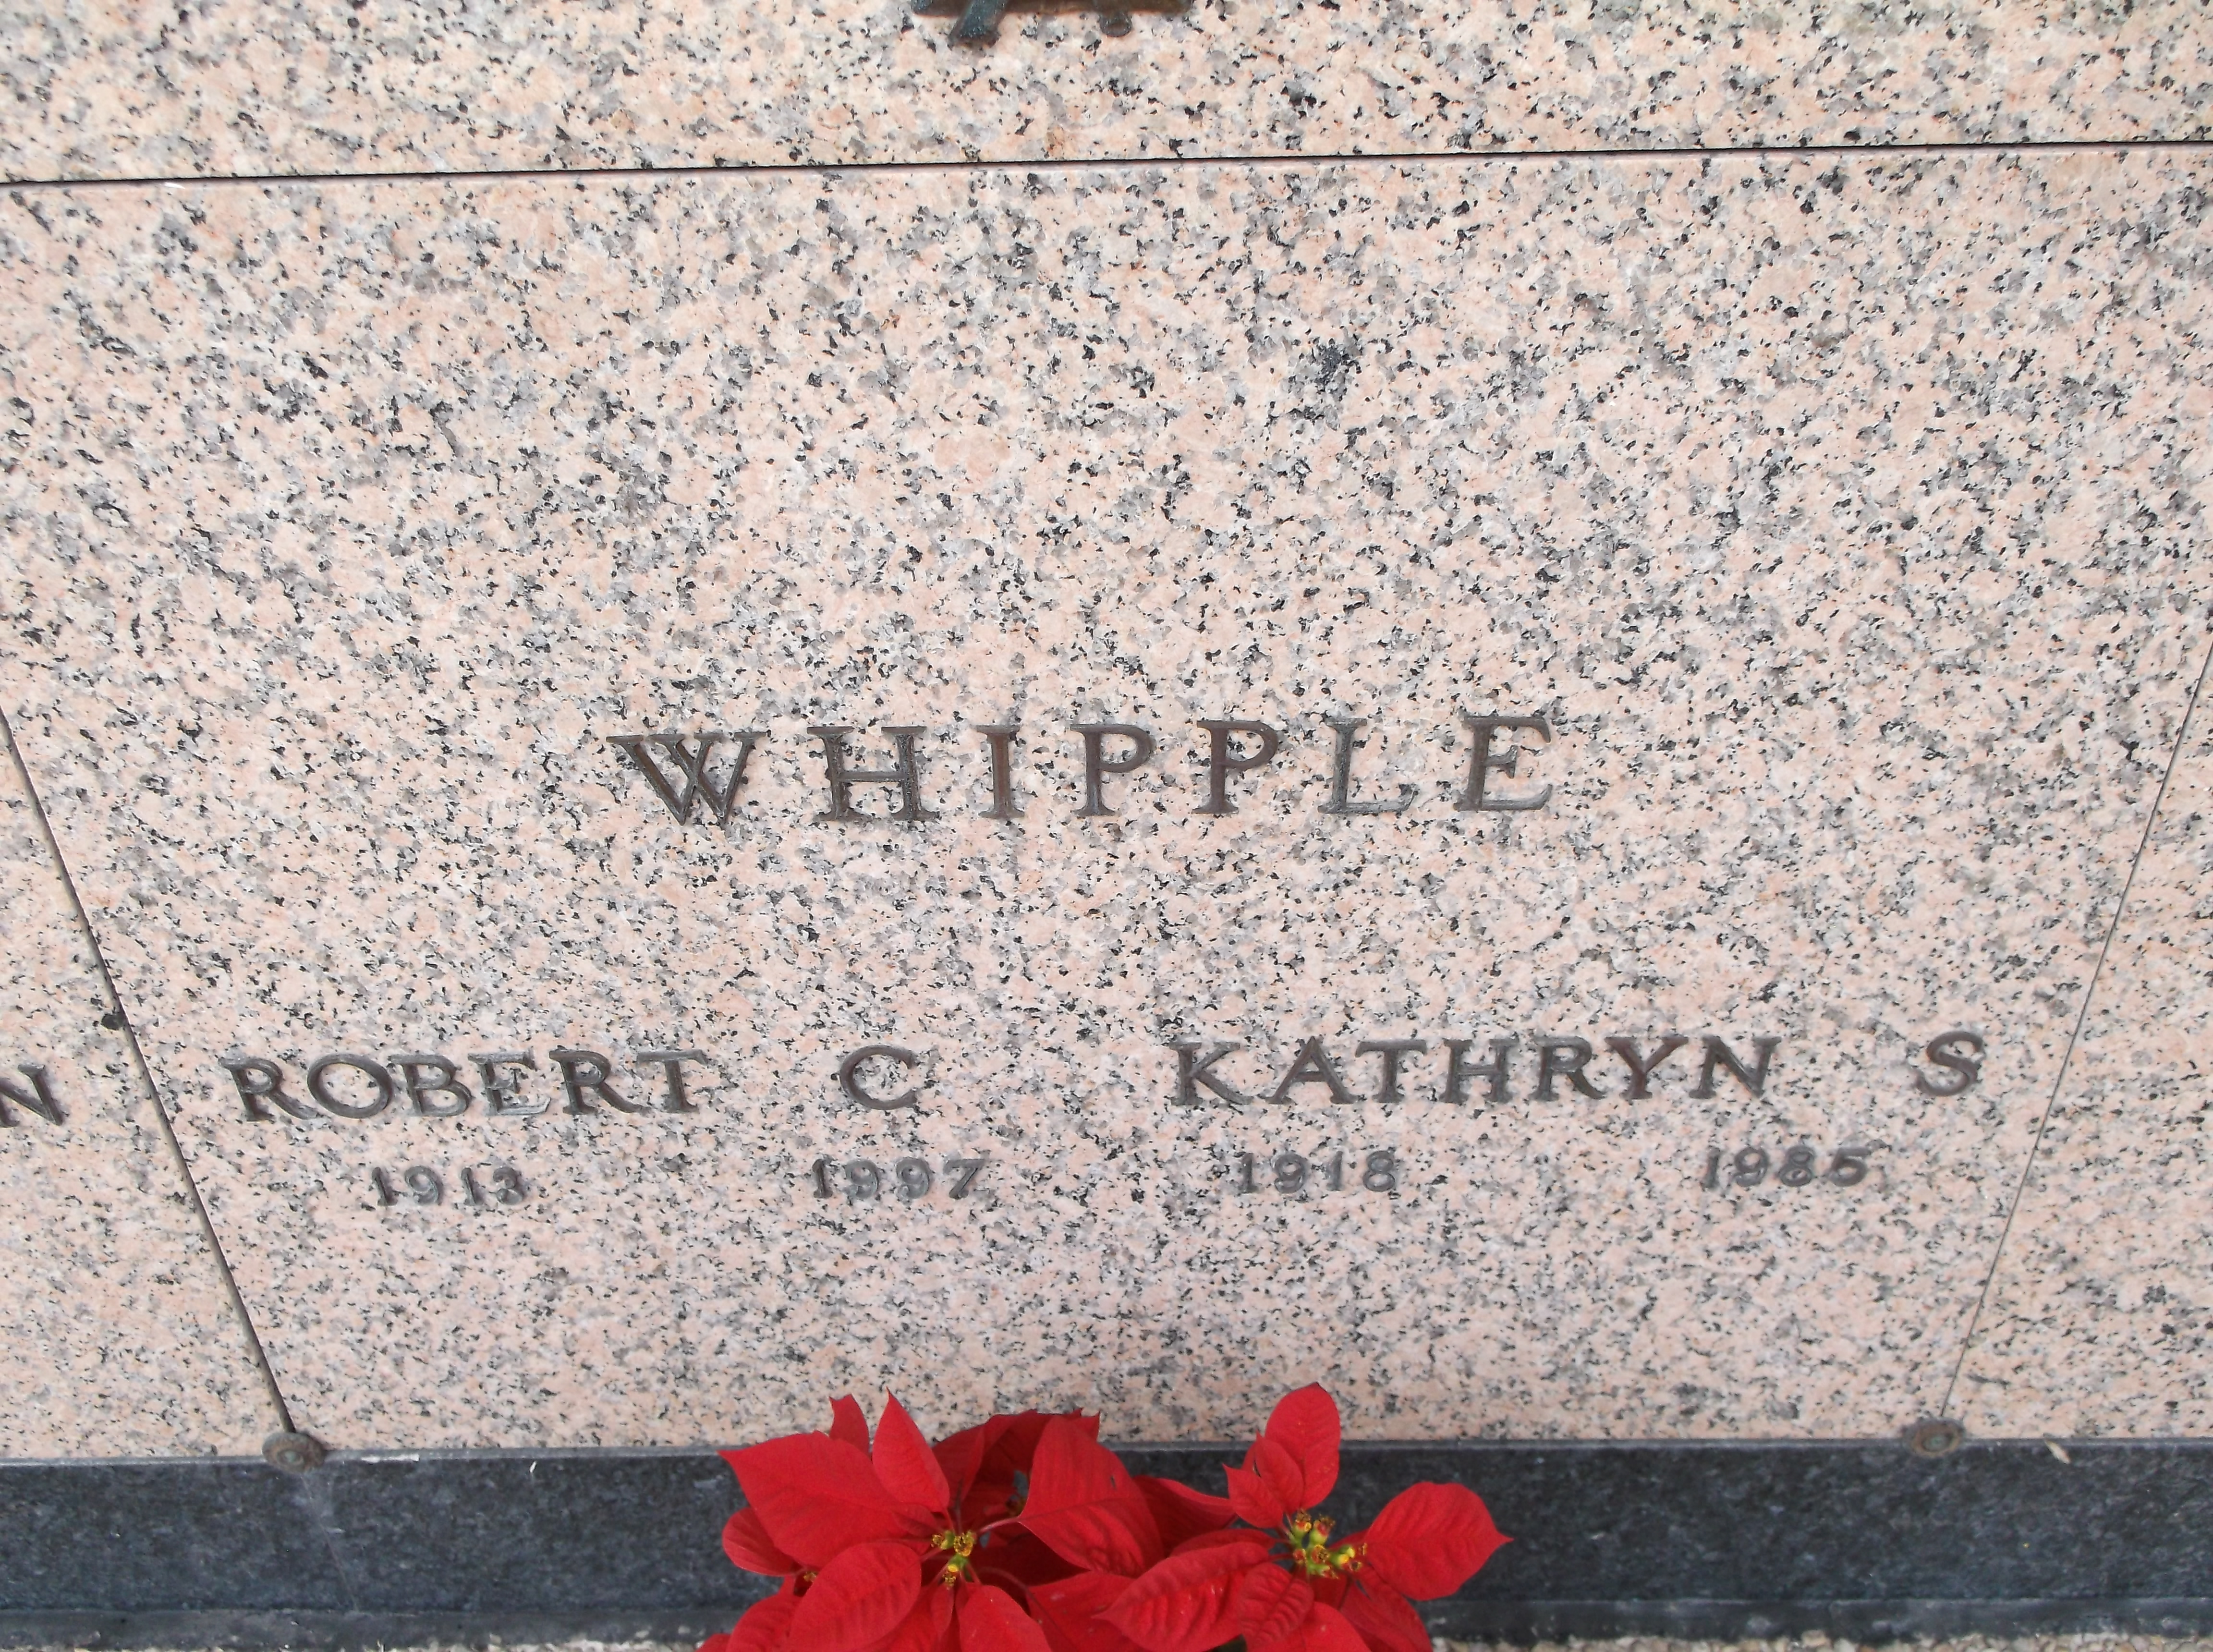 Kathryn S Whipple